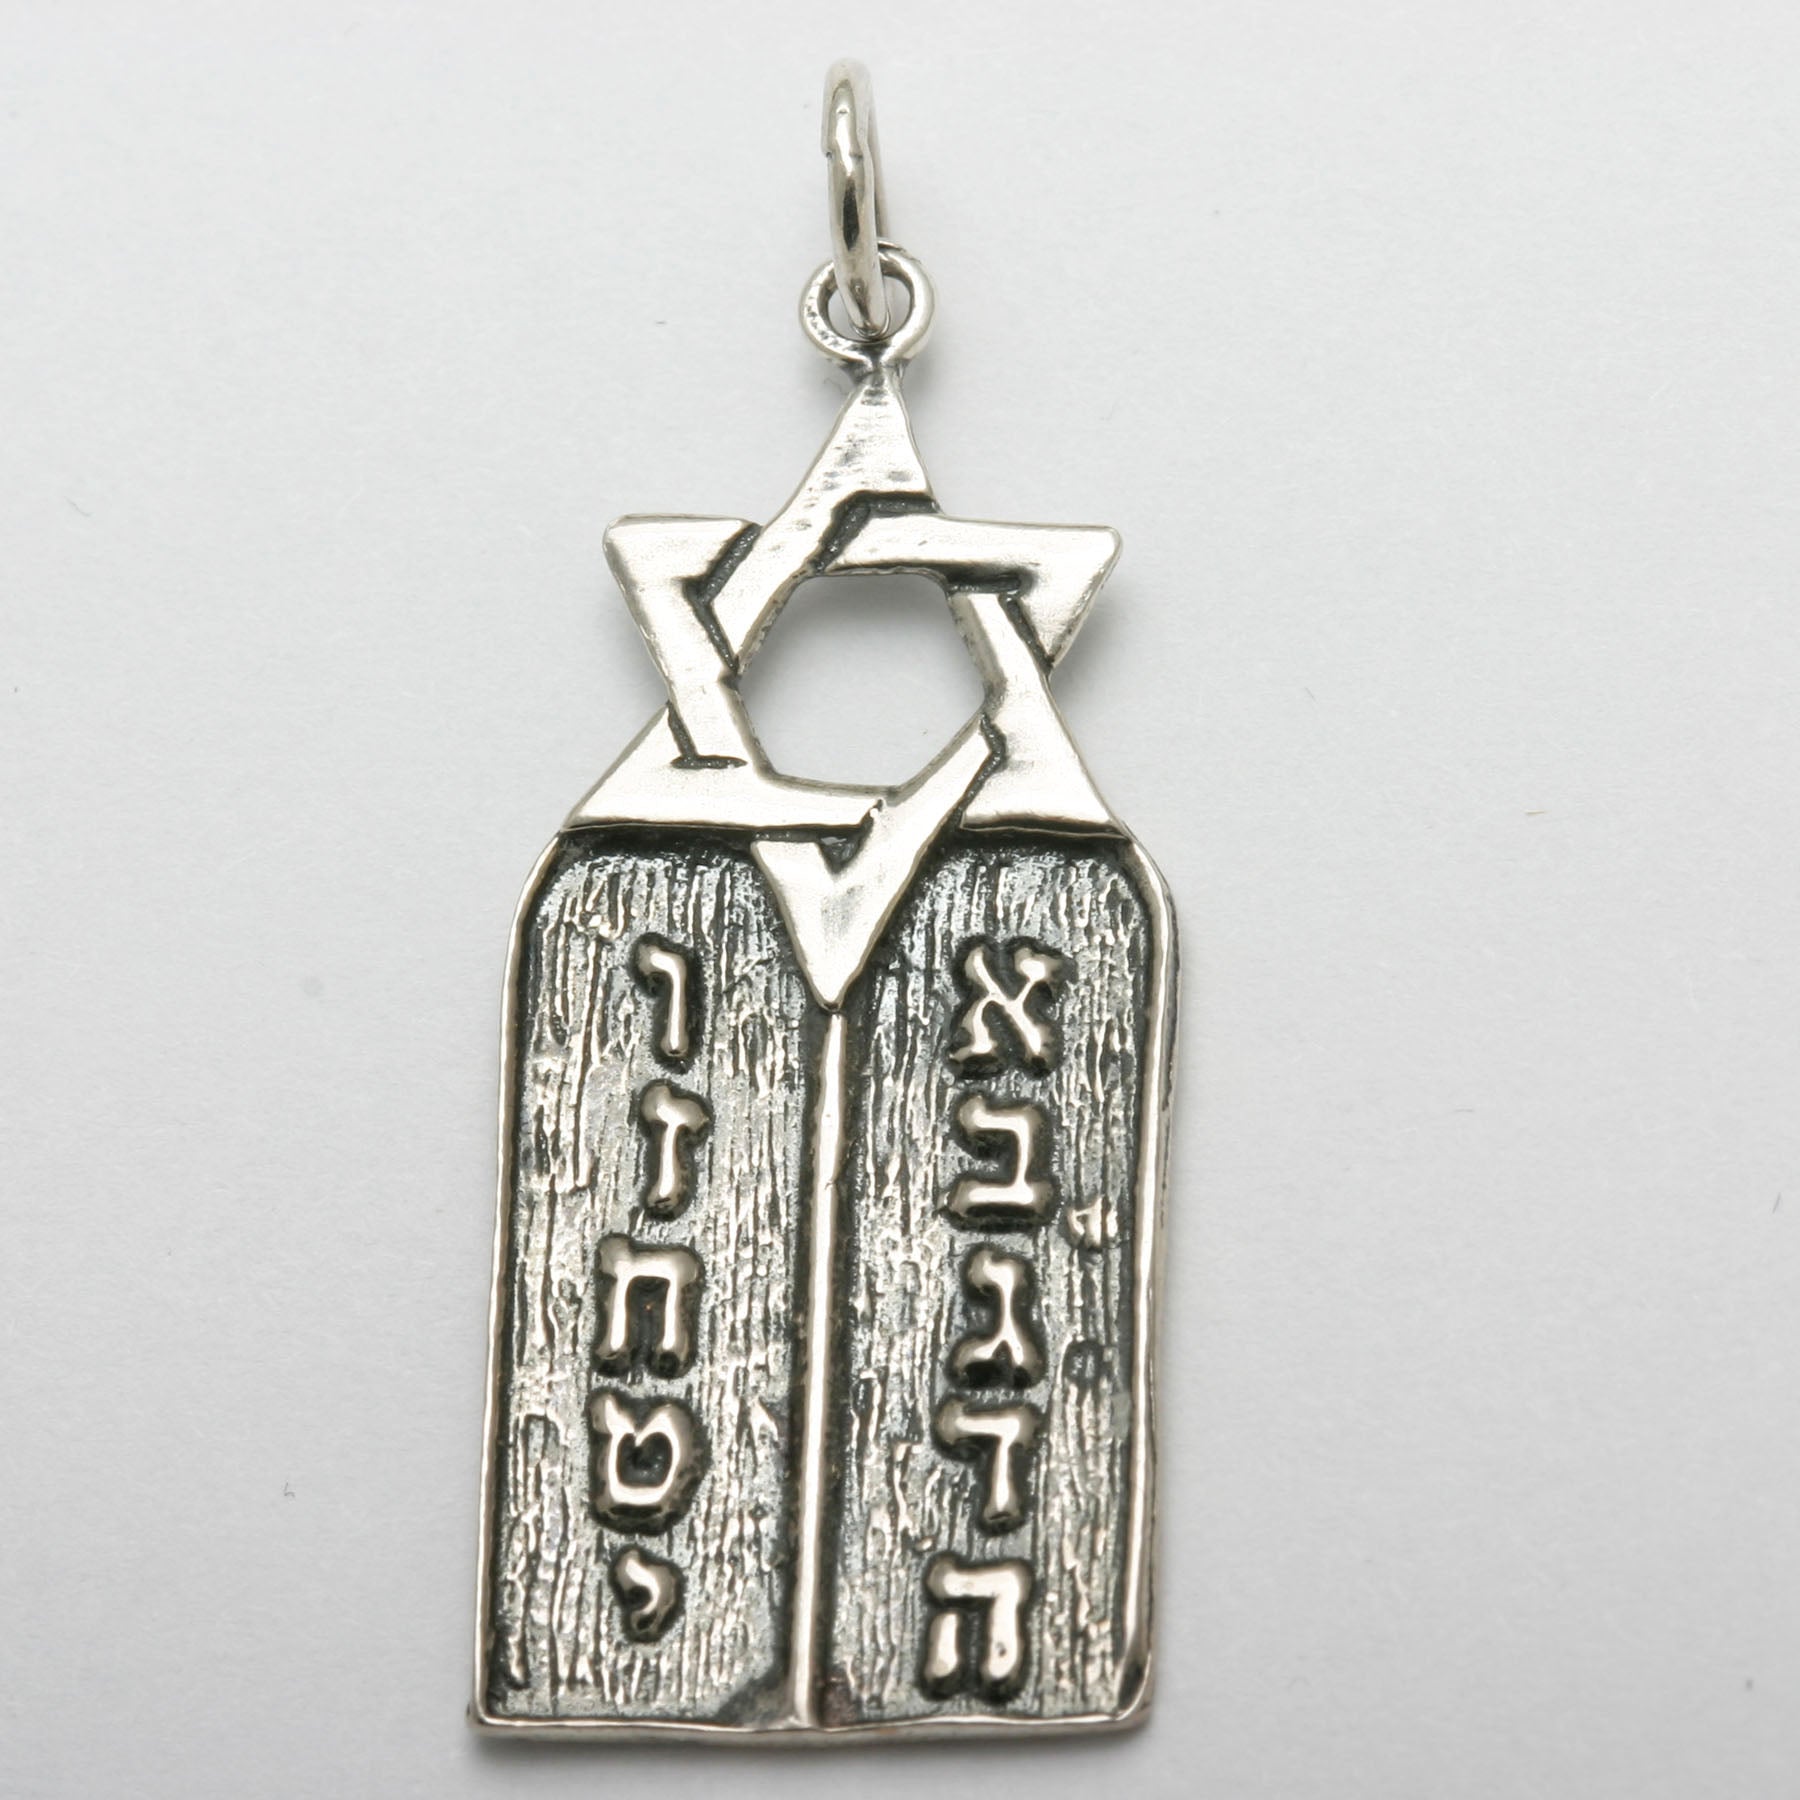 10 Commandments / Torah Jewelry